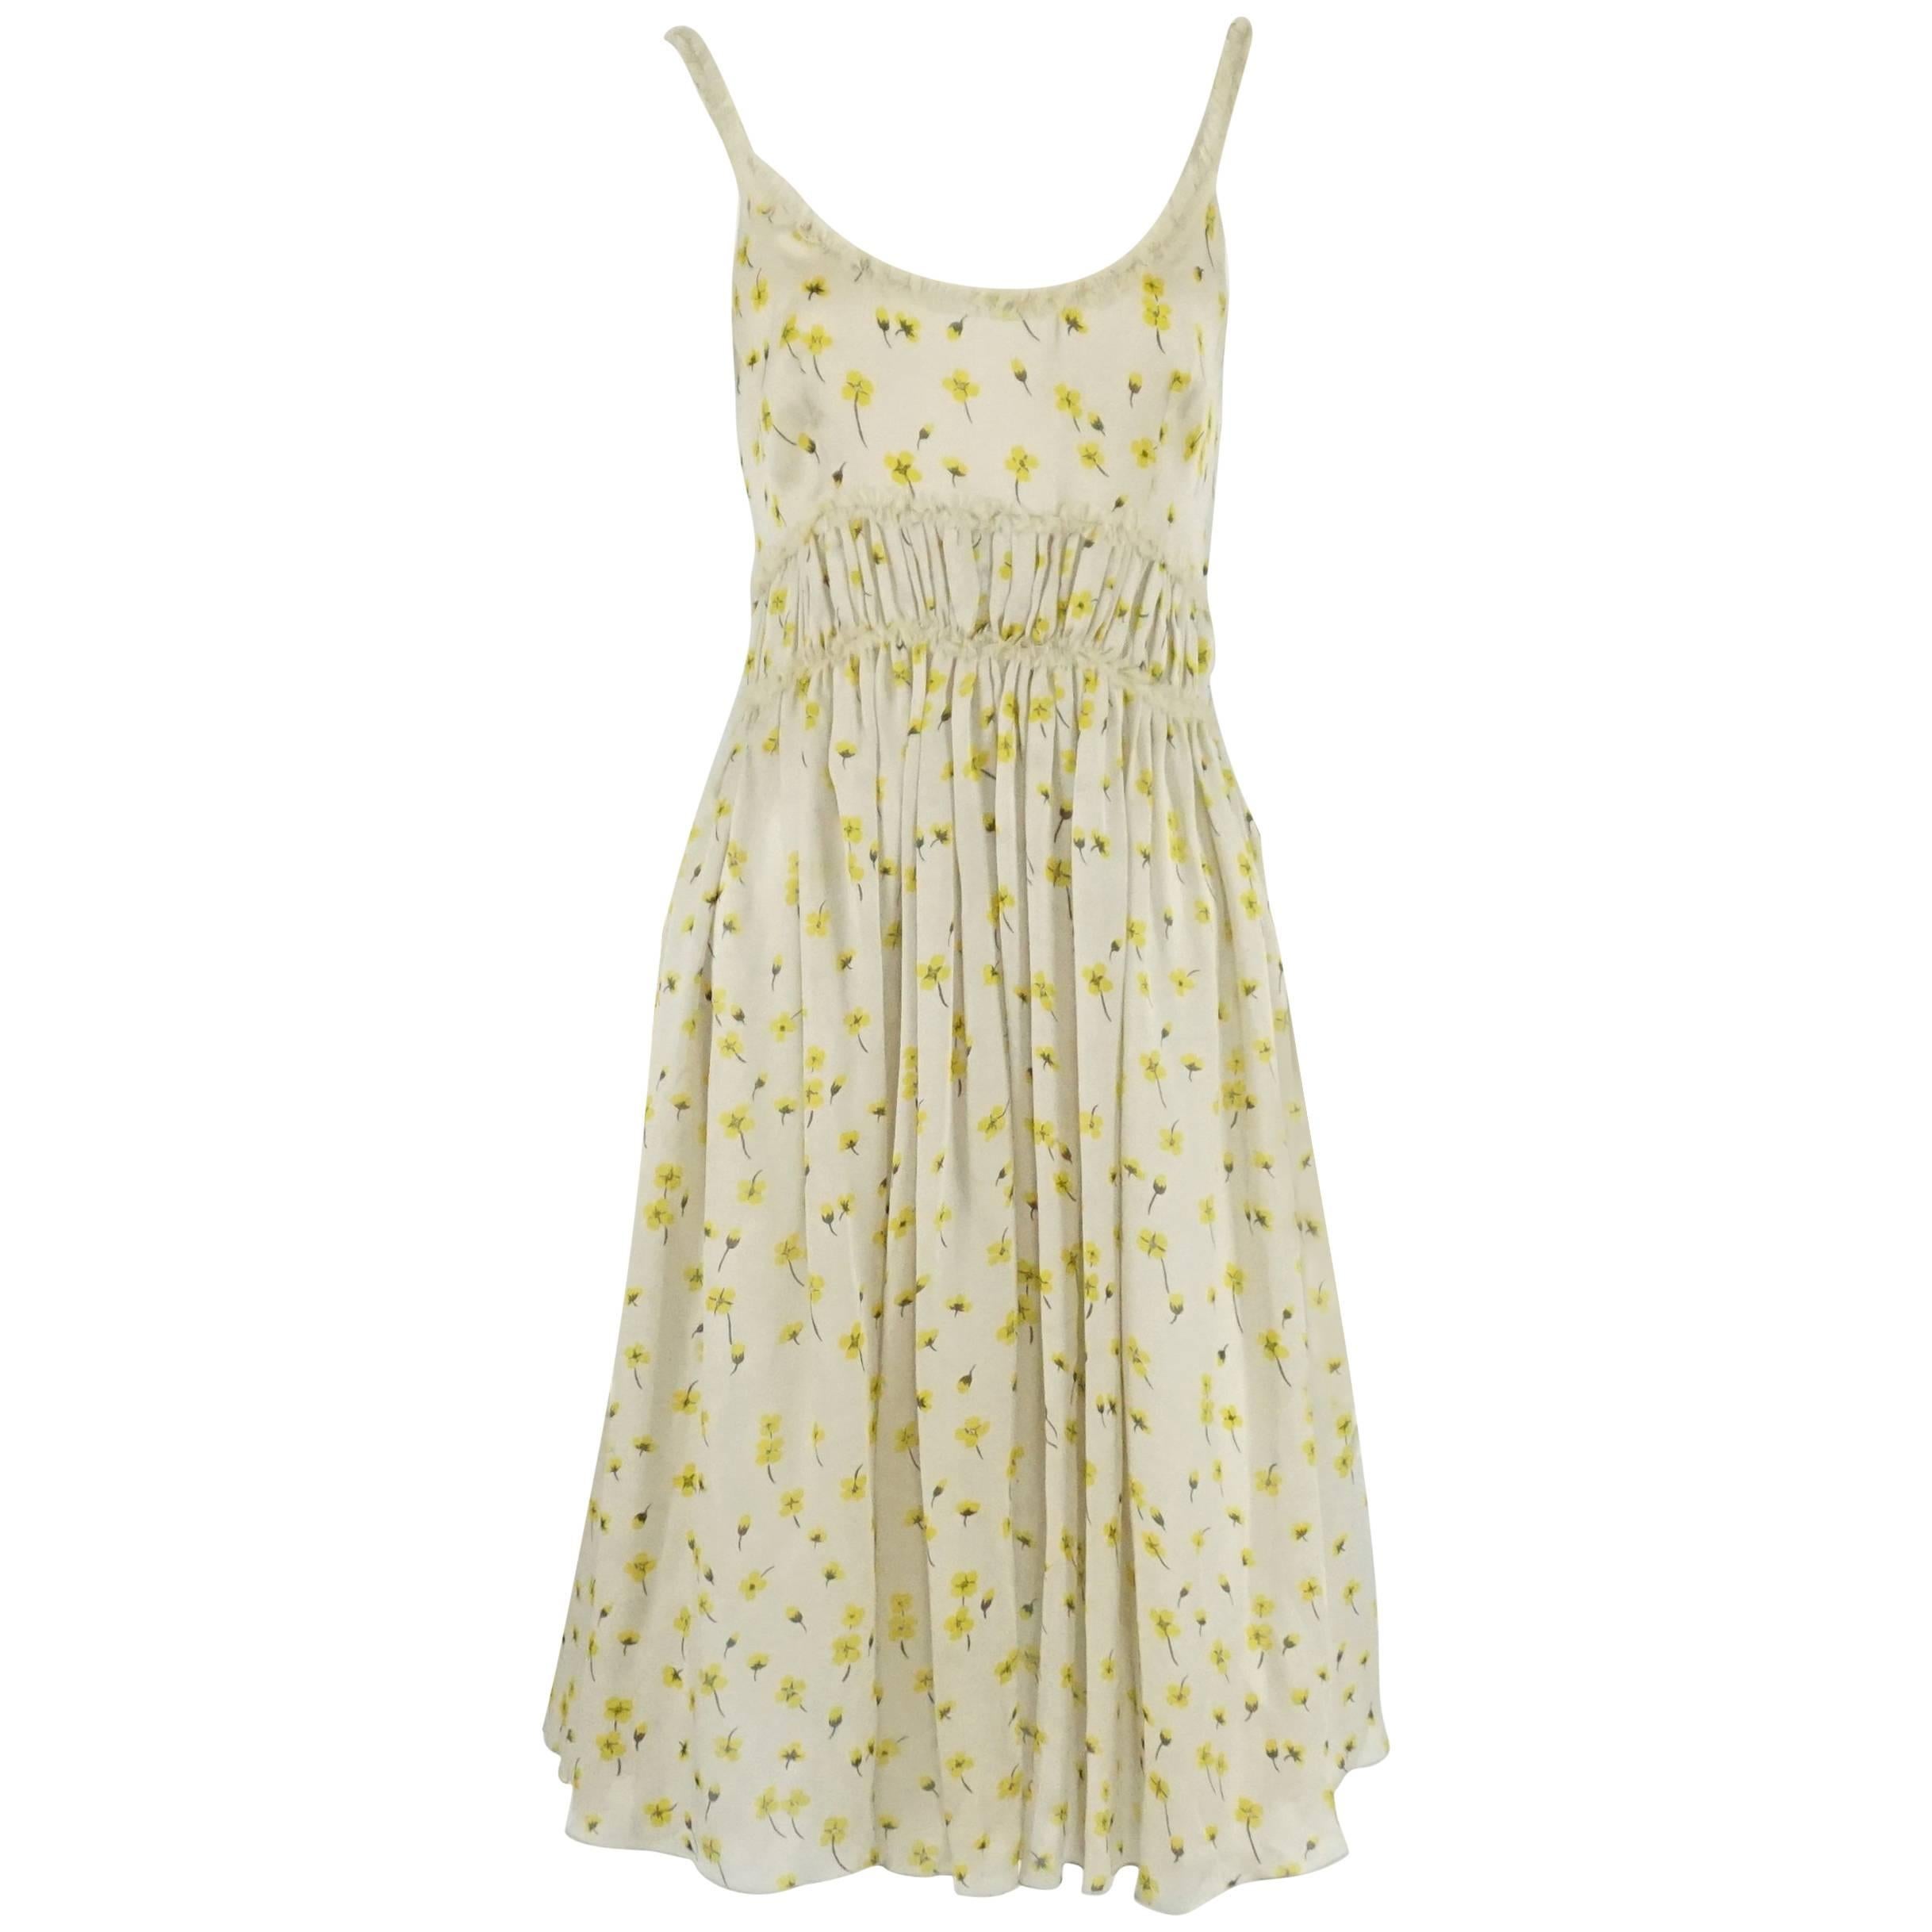 Chloe Cream and Yellow Floral Silk Dress - 36 